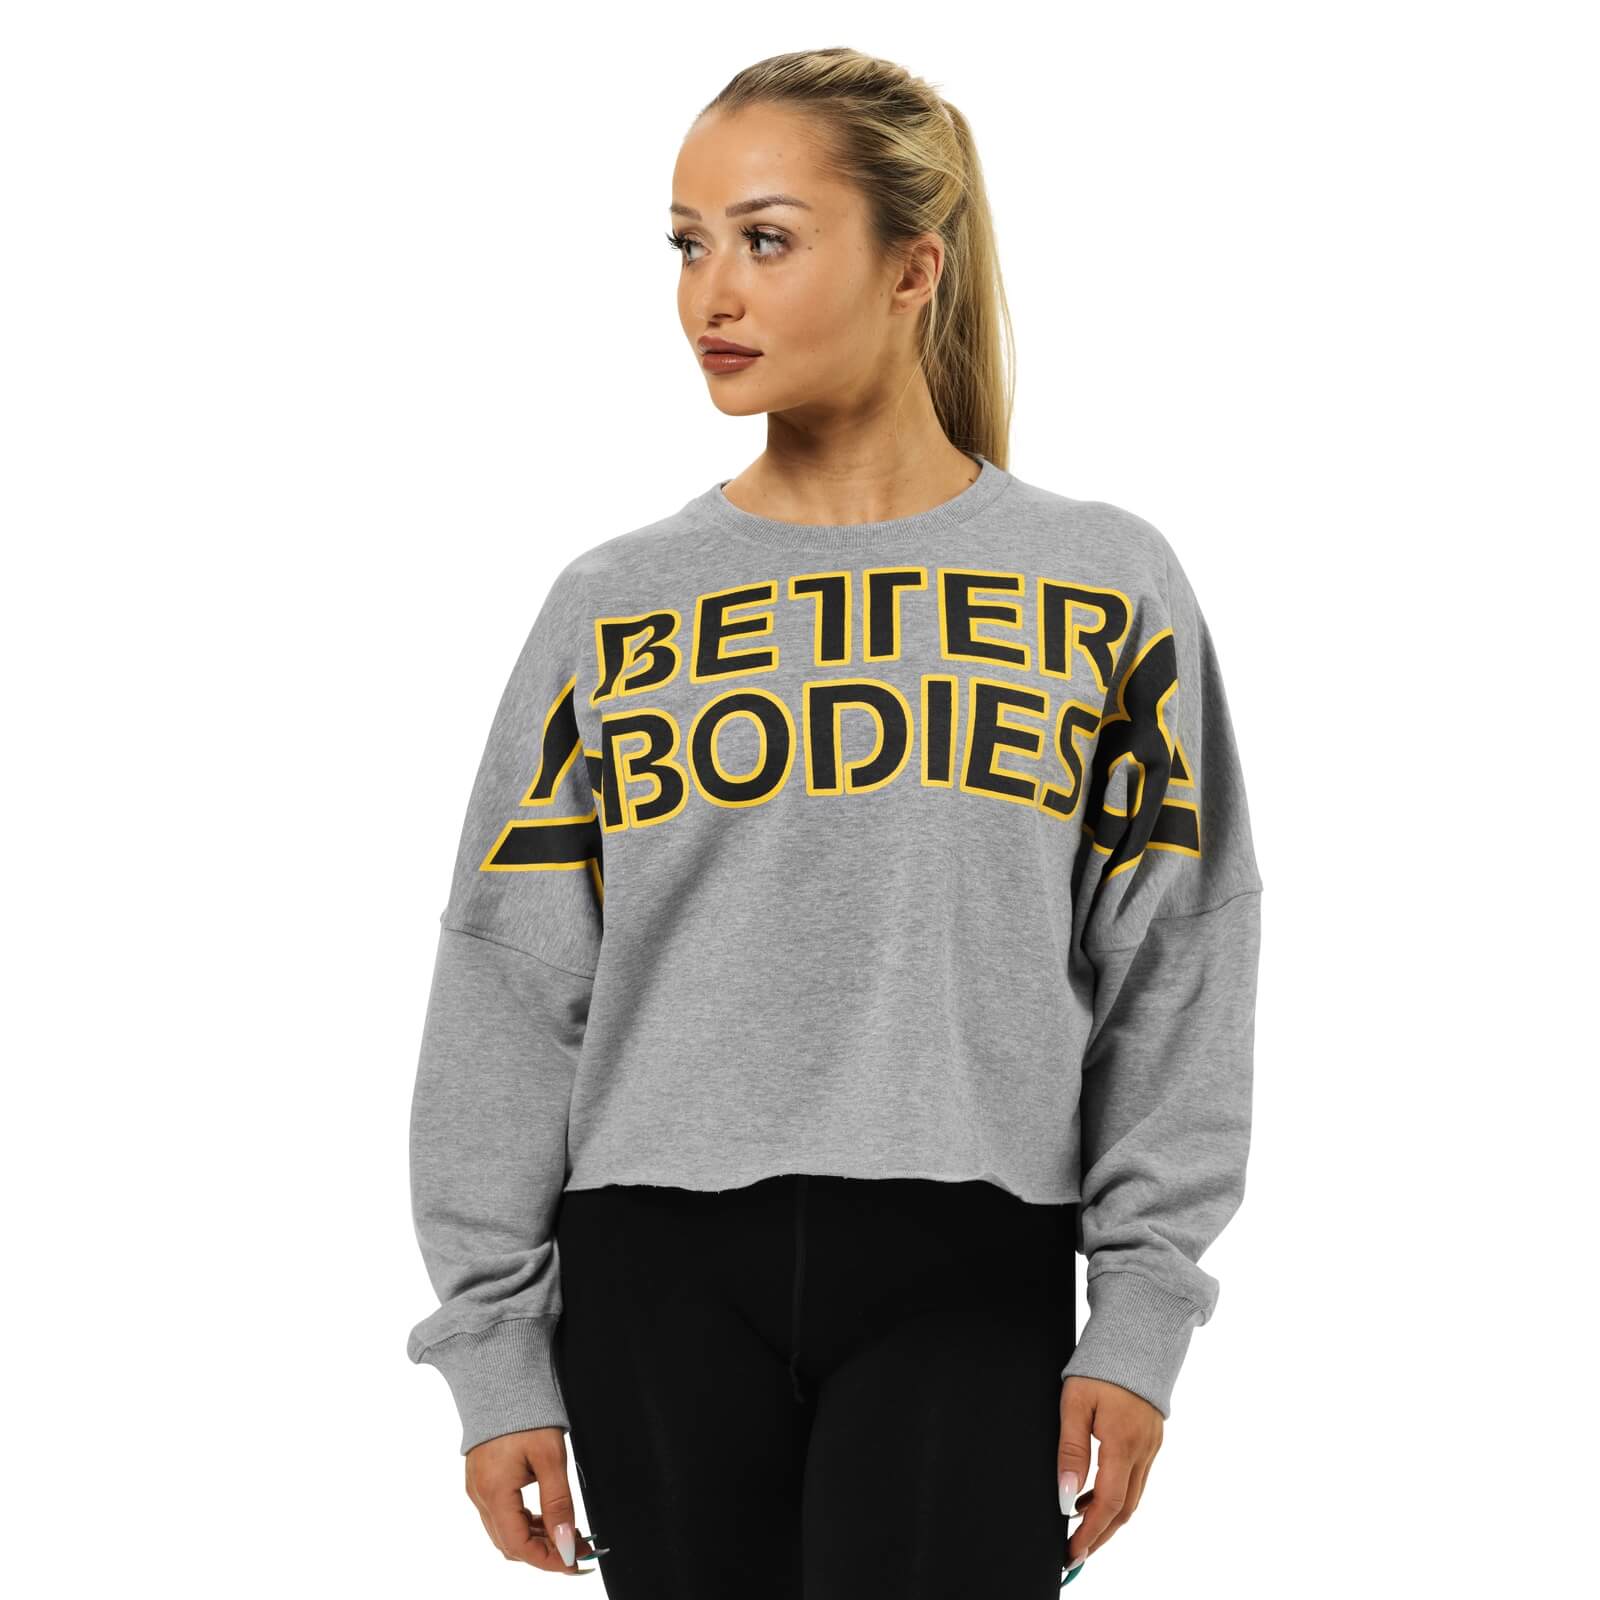 Bowery Raw Sweater, greymelange, Better Bodies